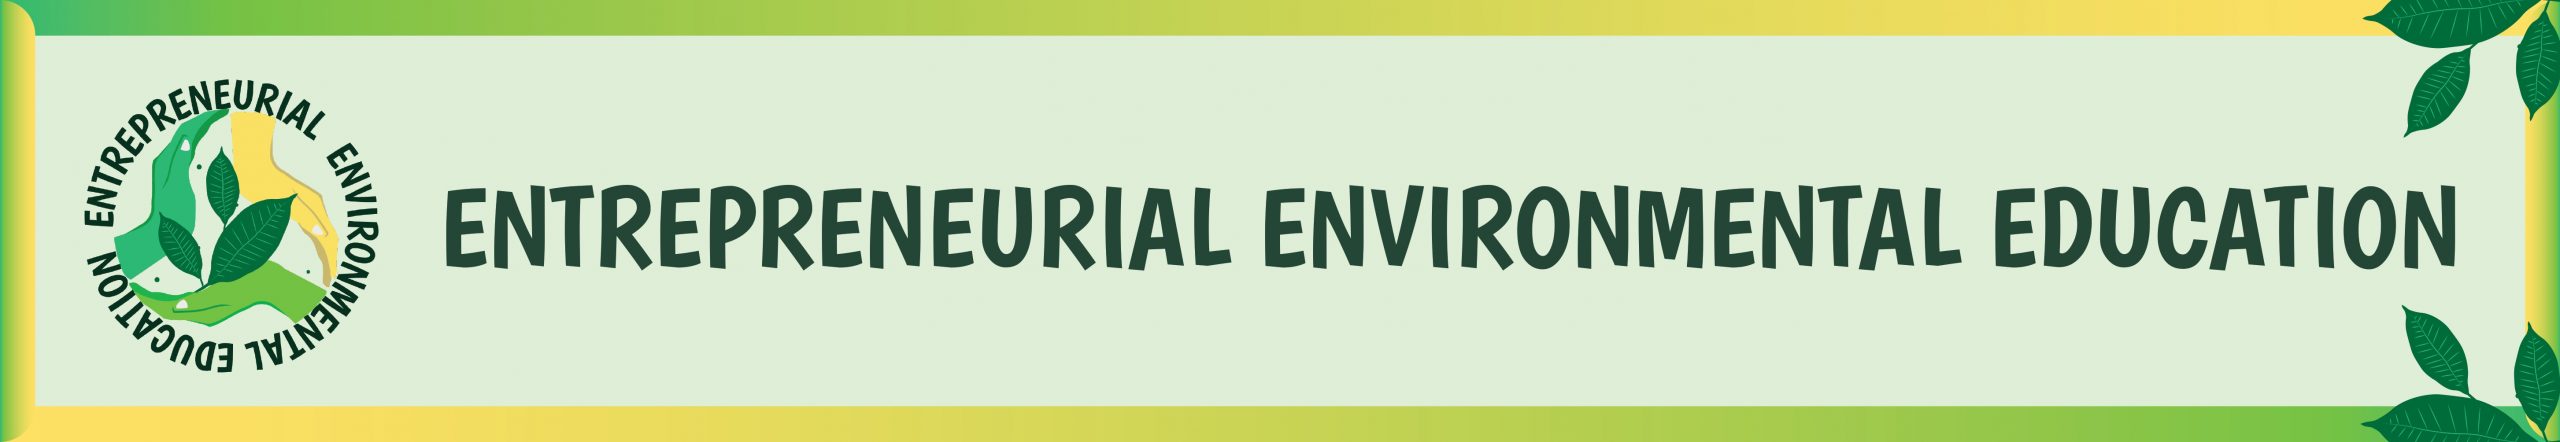 Entrepreneurial Environmental Education